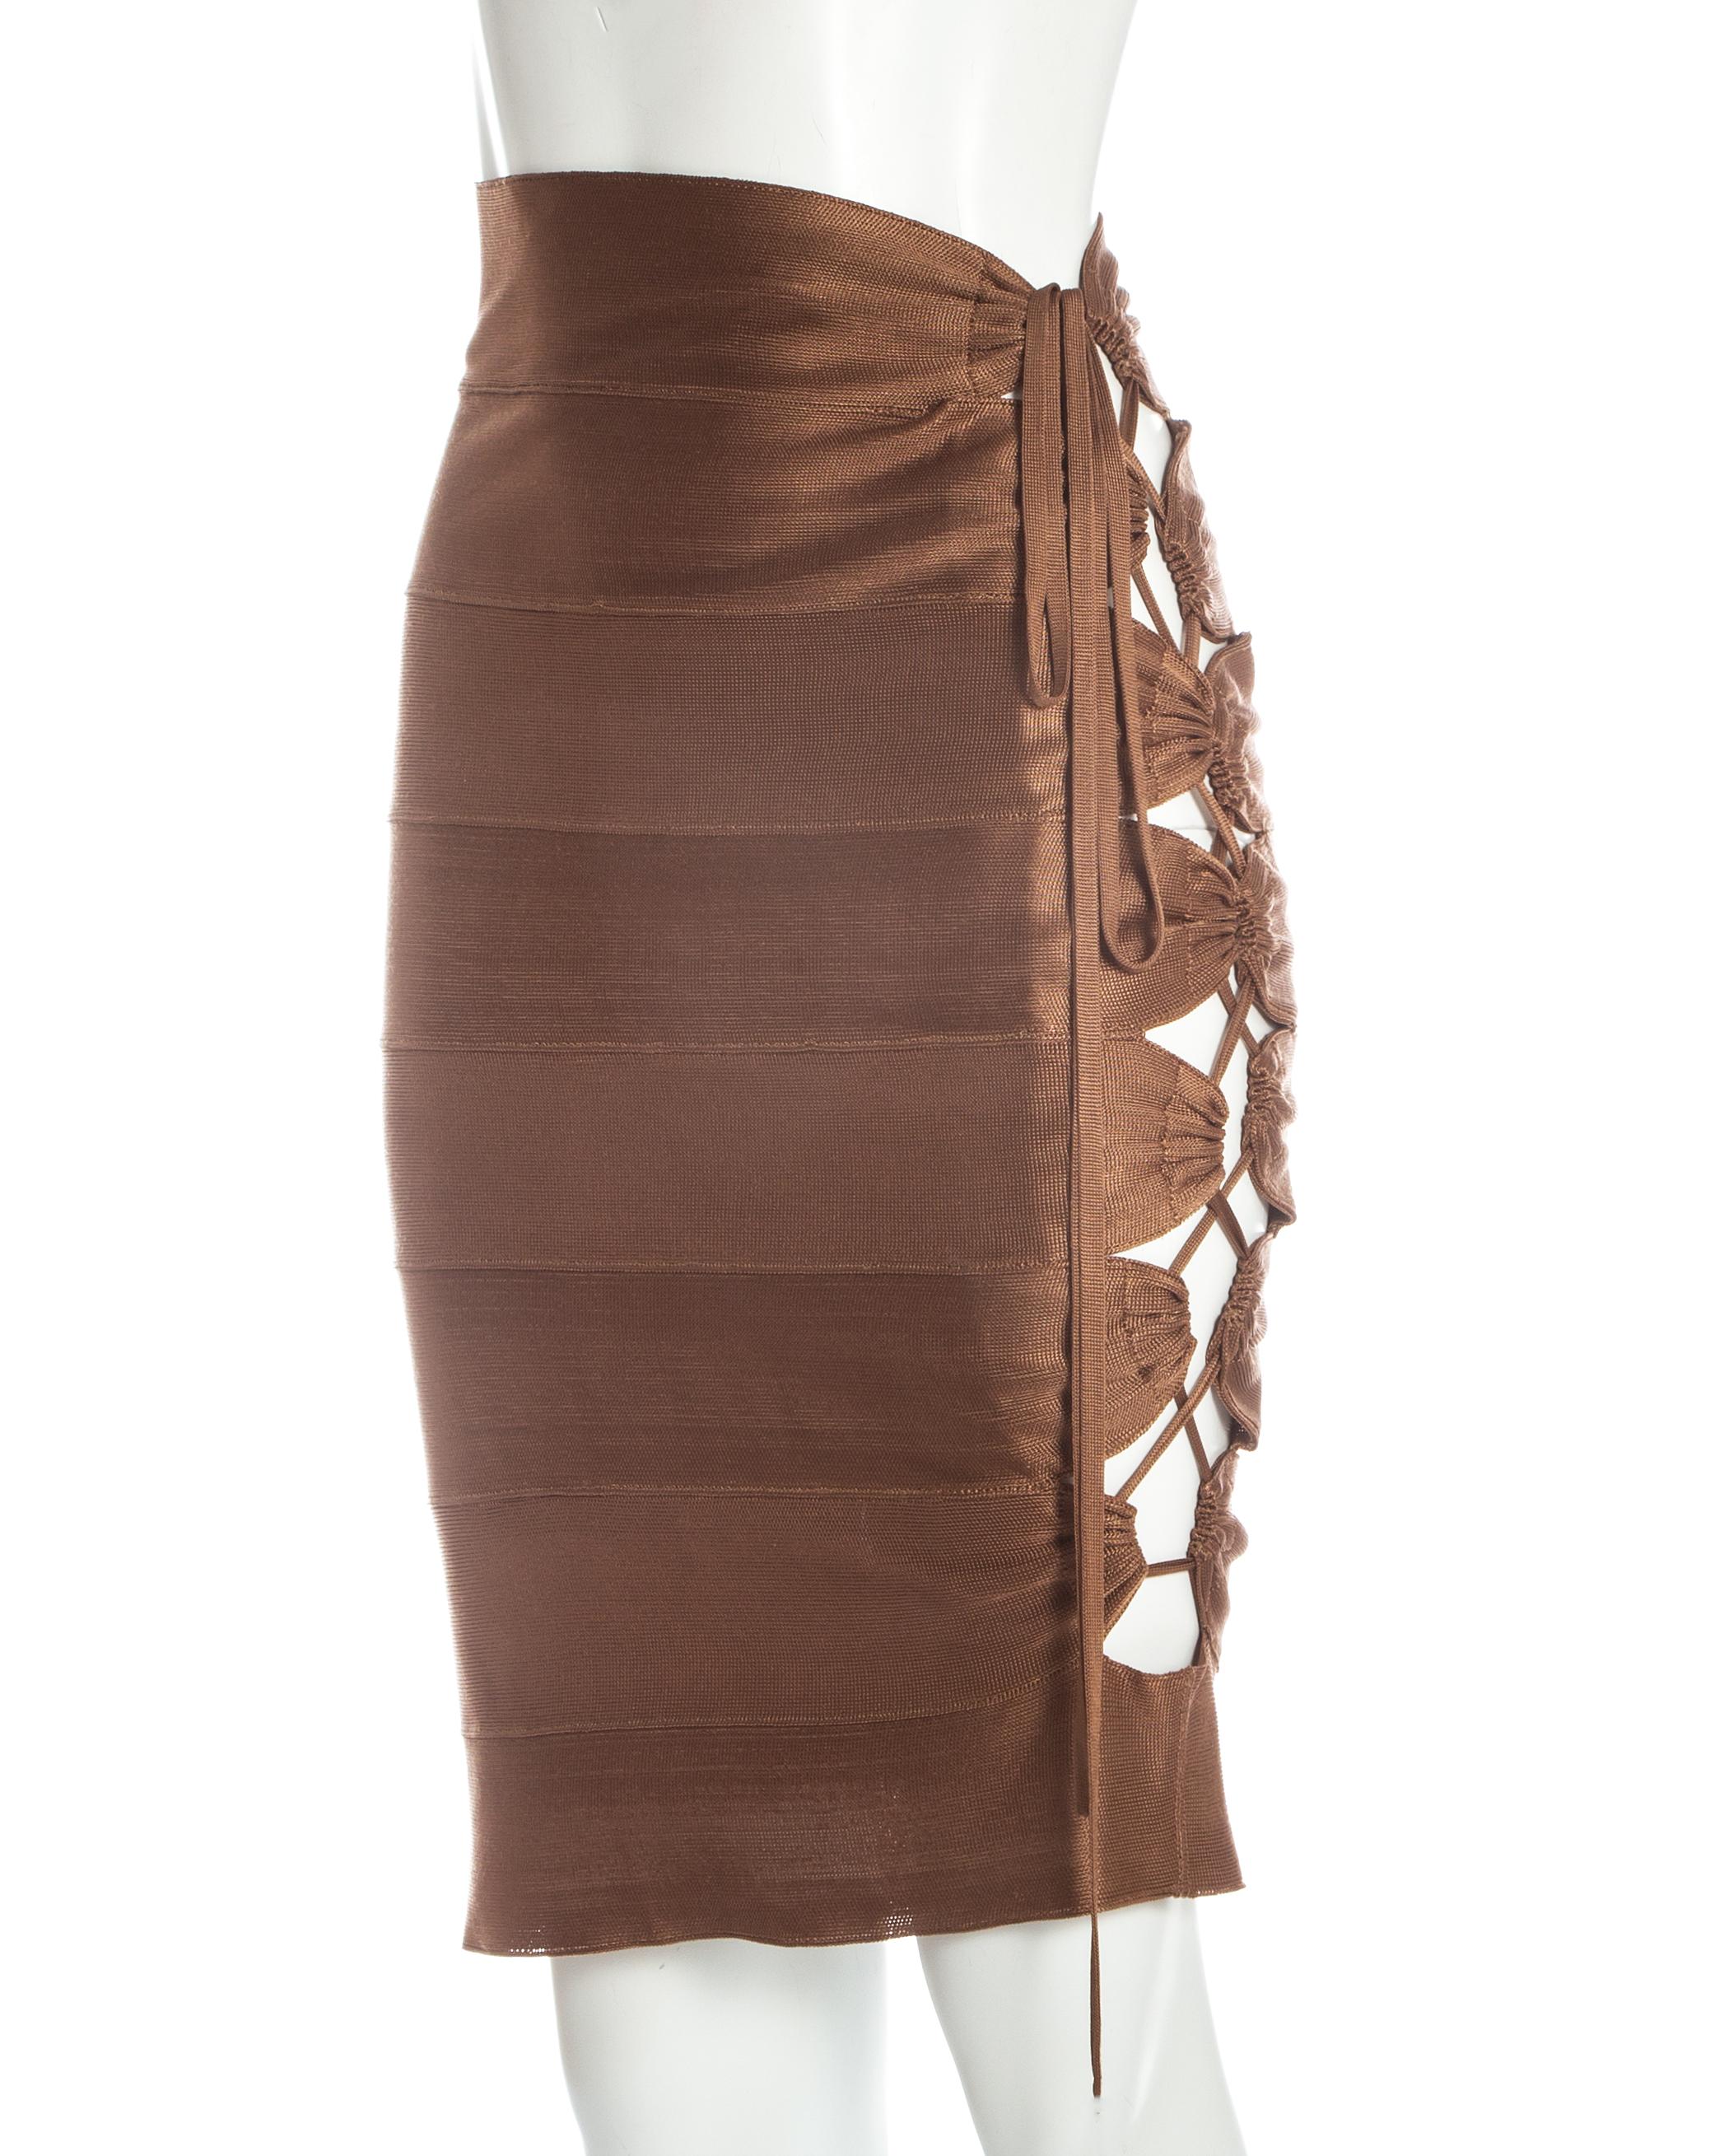 Azzedine Alaia bronze acetate knit bodysuit and lace up skirt ensemble, S/S 1986 6